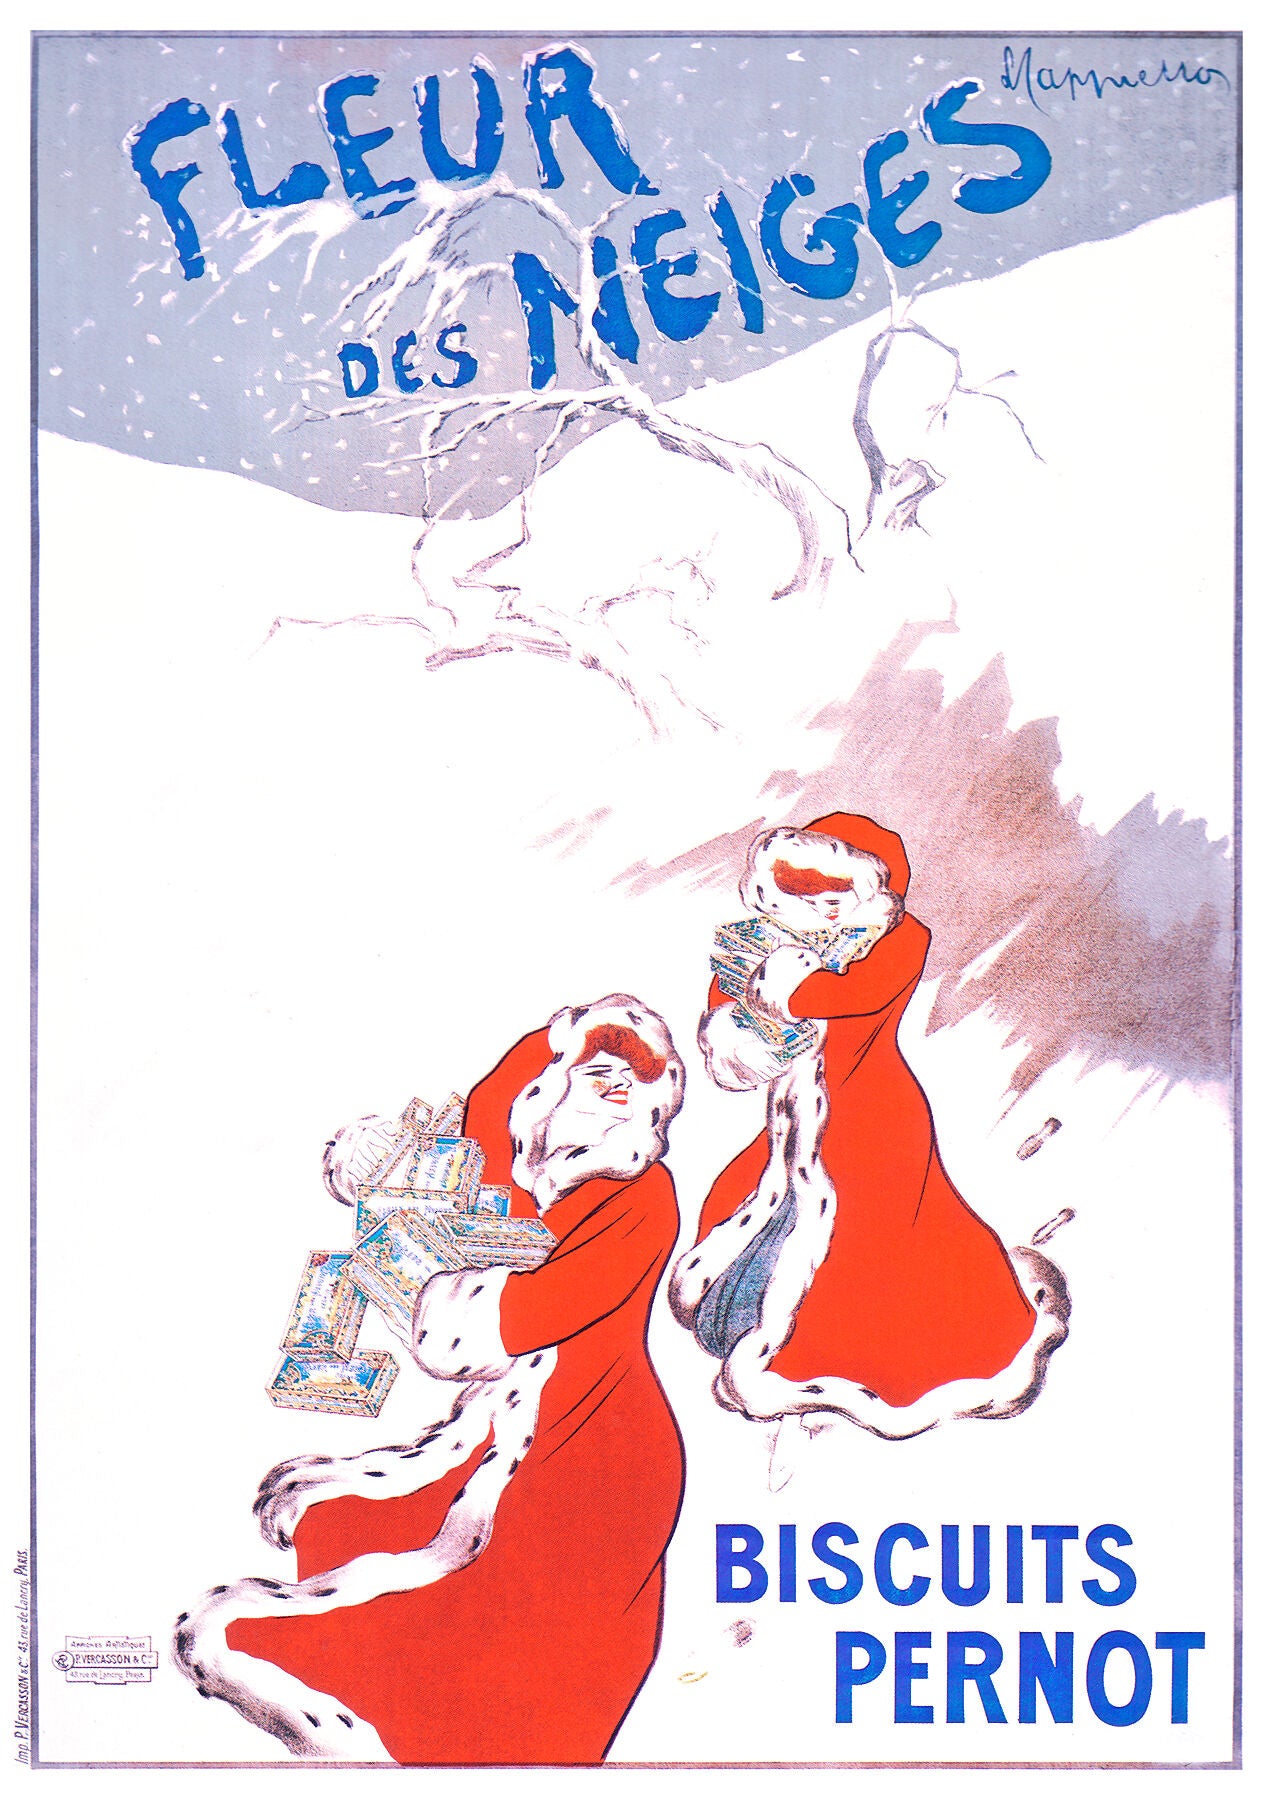 Fleur Des Neiges poster by Leonetto Cappiello